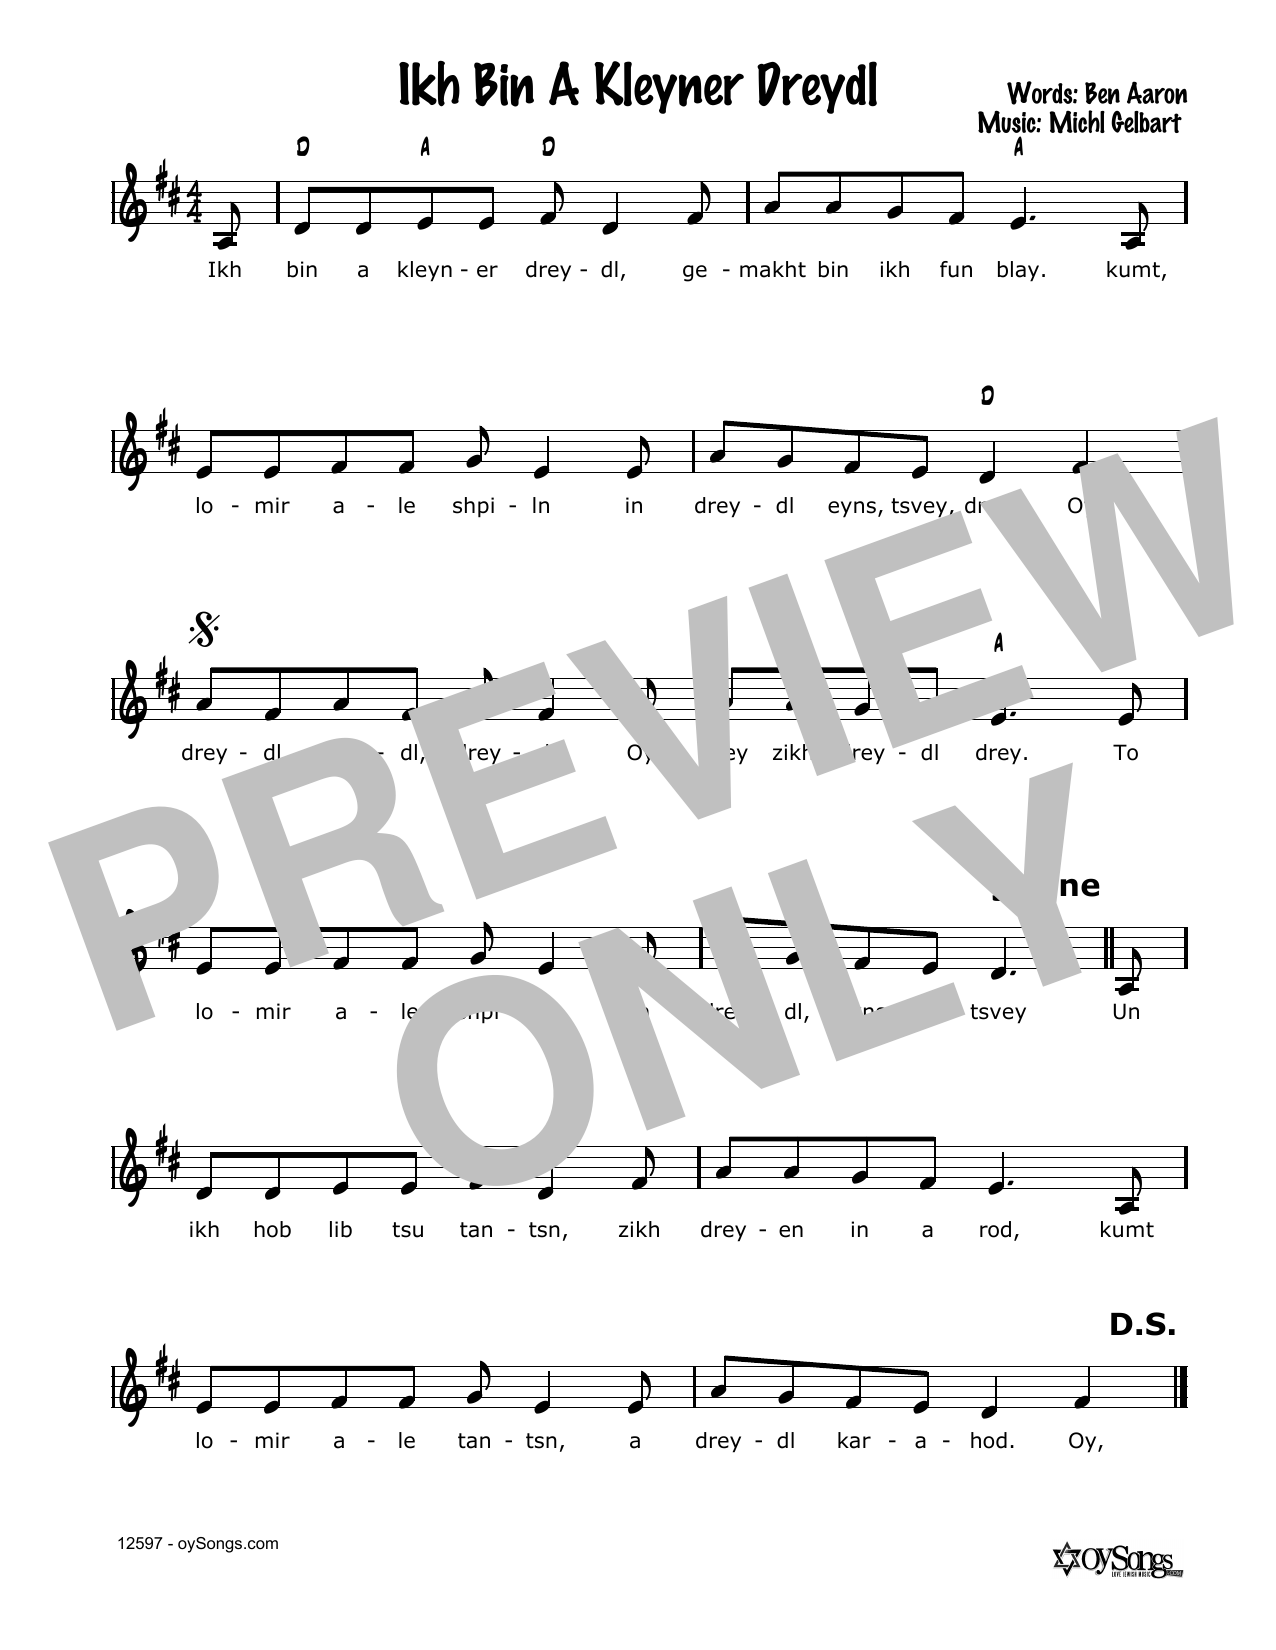 Cindy Paley Ikh Bin A Kleyner Dreydl sheet music notes and chords arranged for Lead Sheet / Fake Book